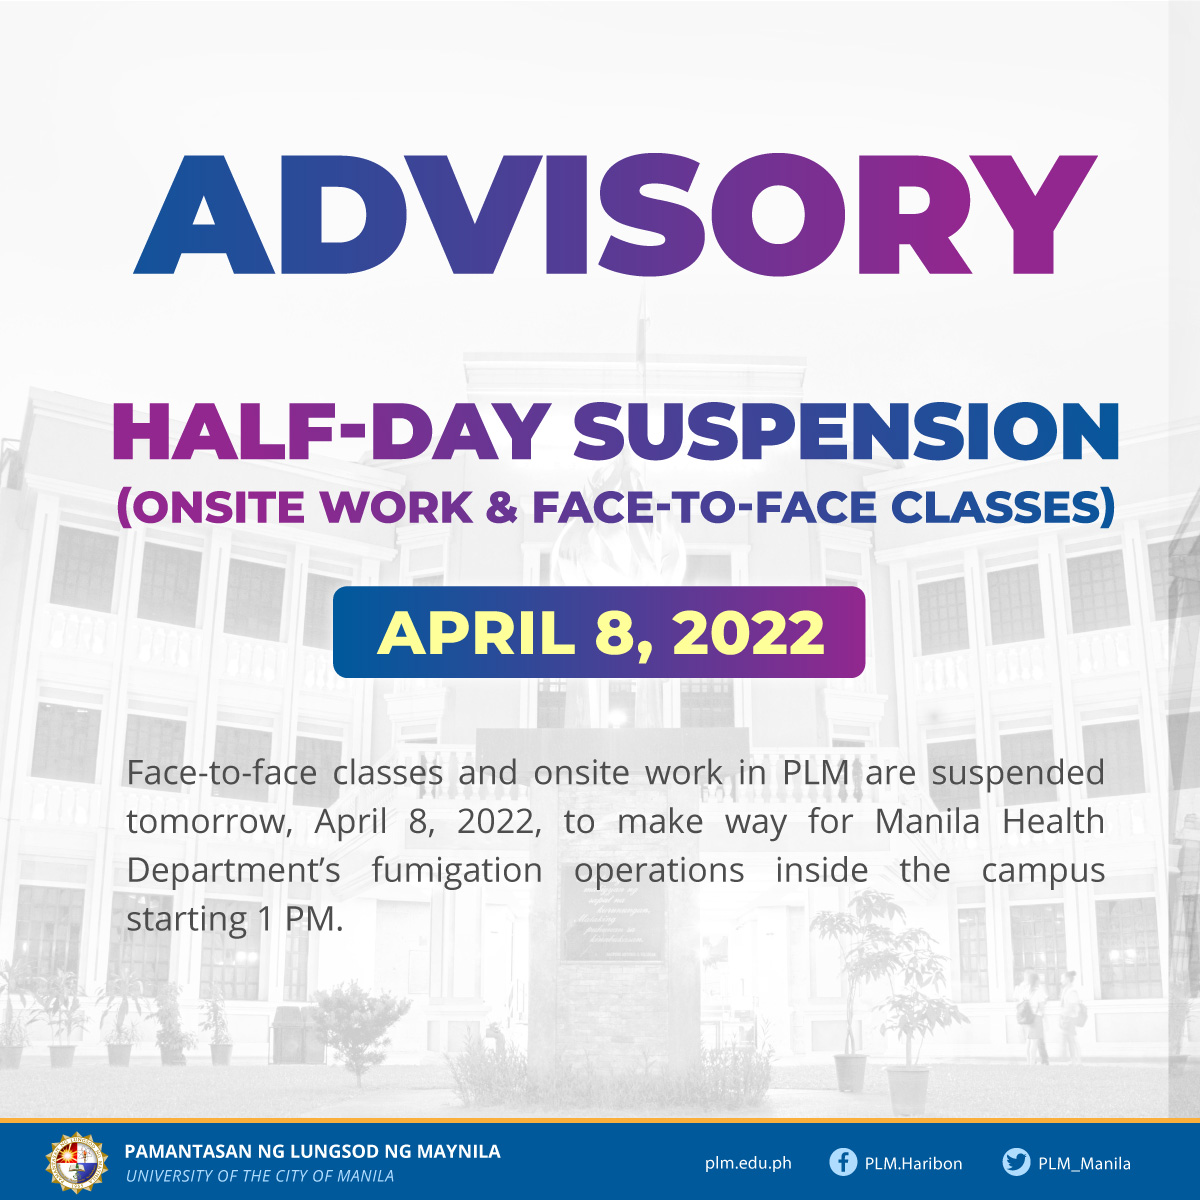 Half-day F2F classes, work suspension on April 8, 2022